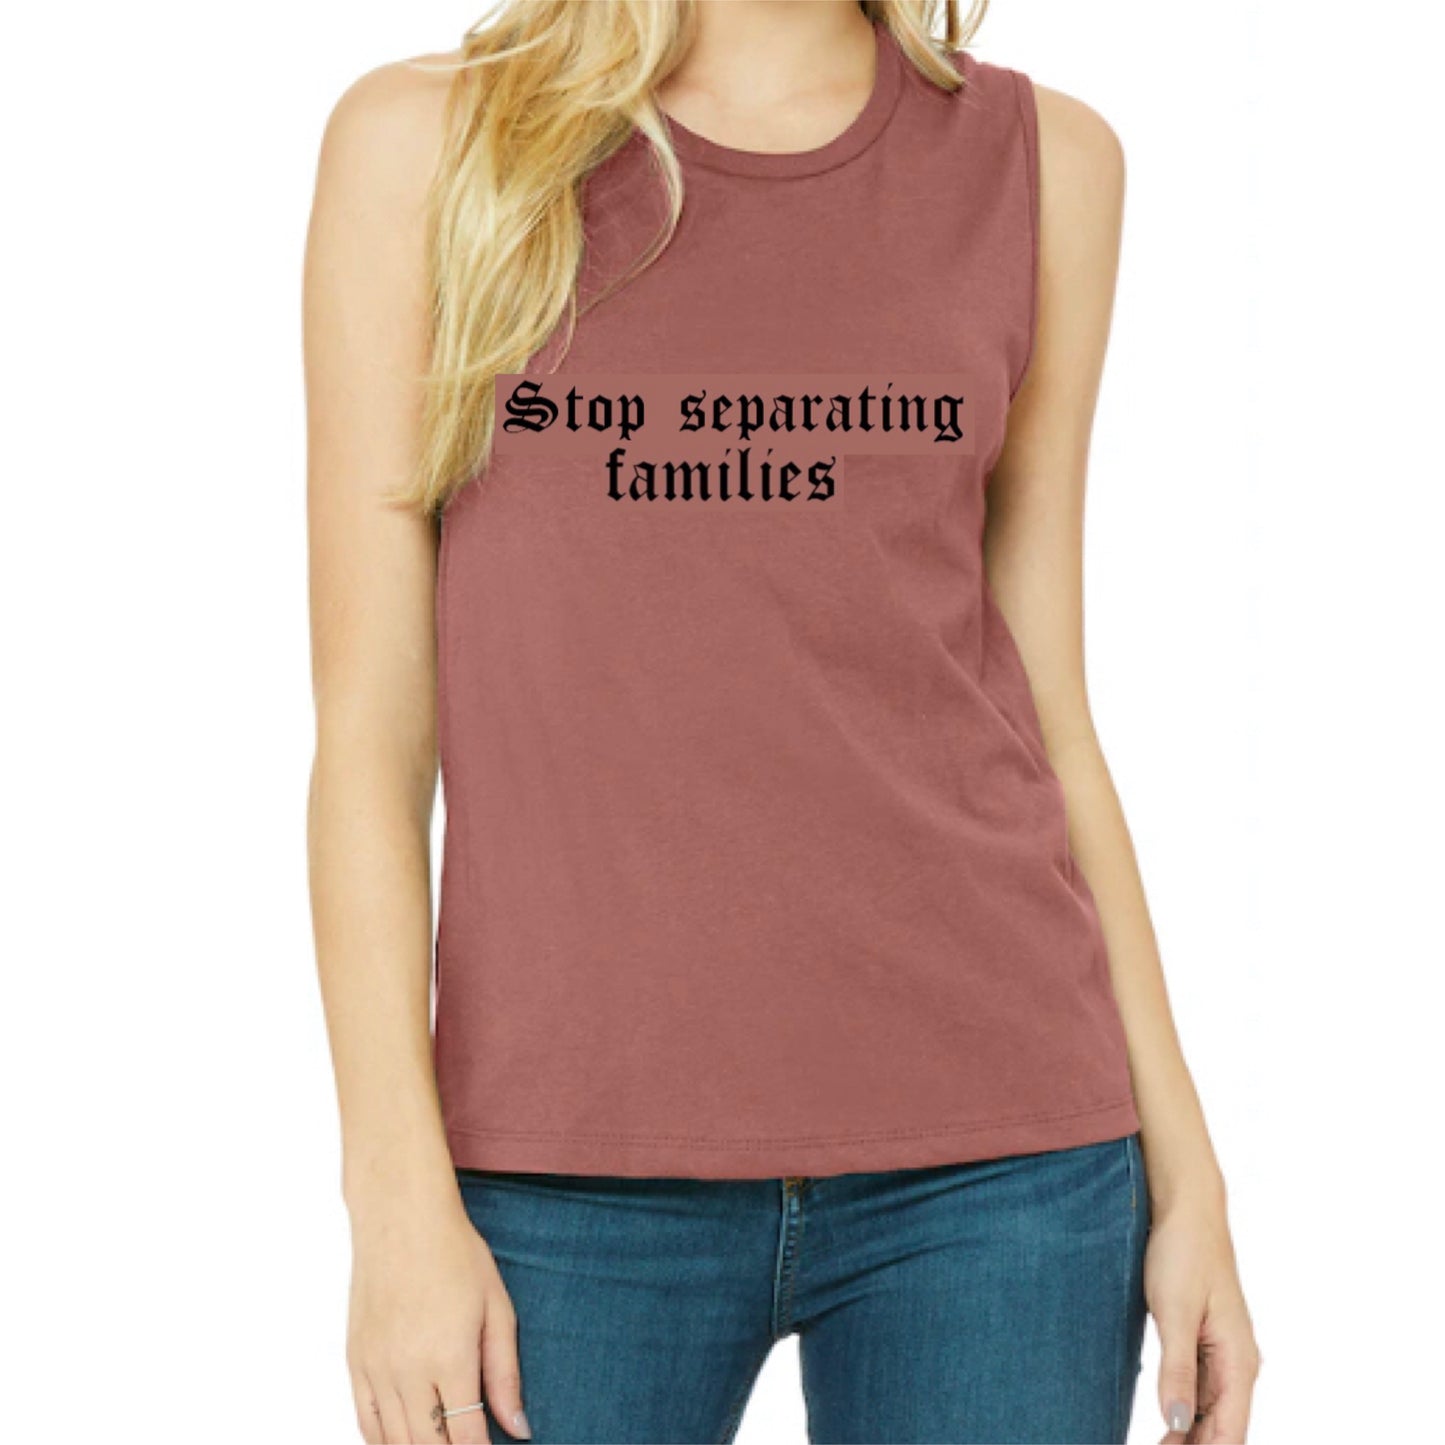 Stop separating families tank top